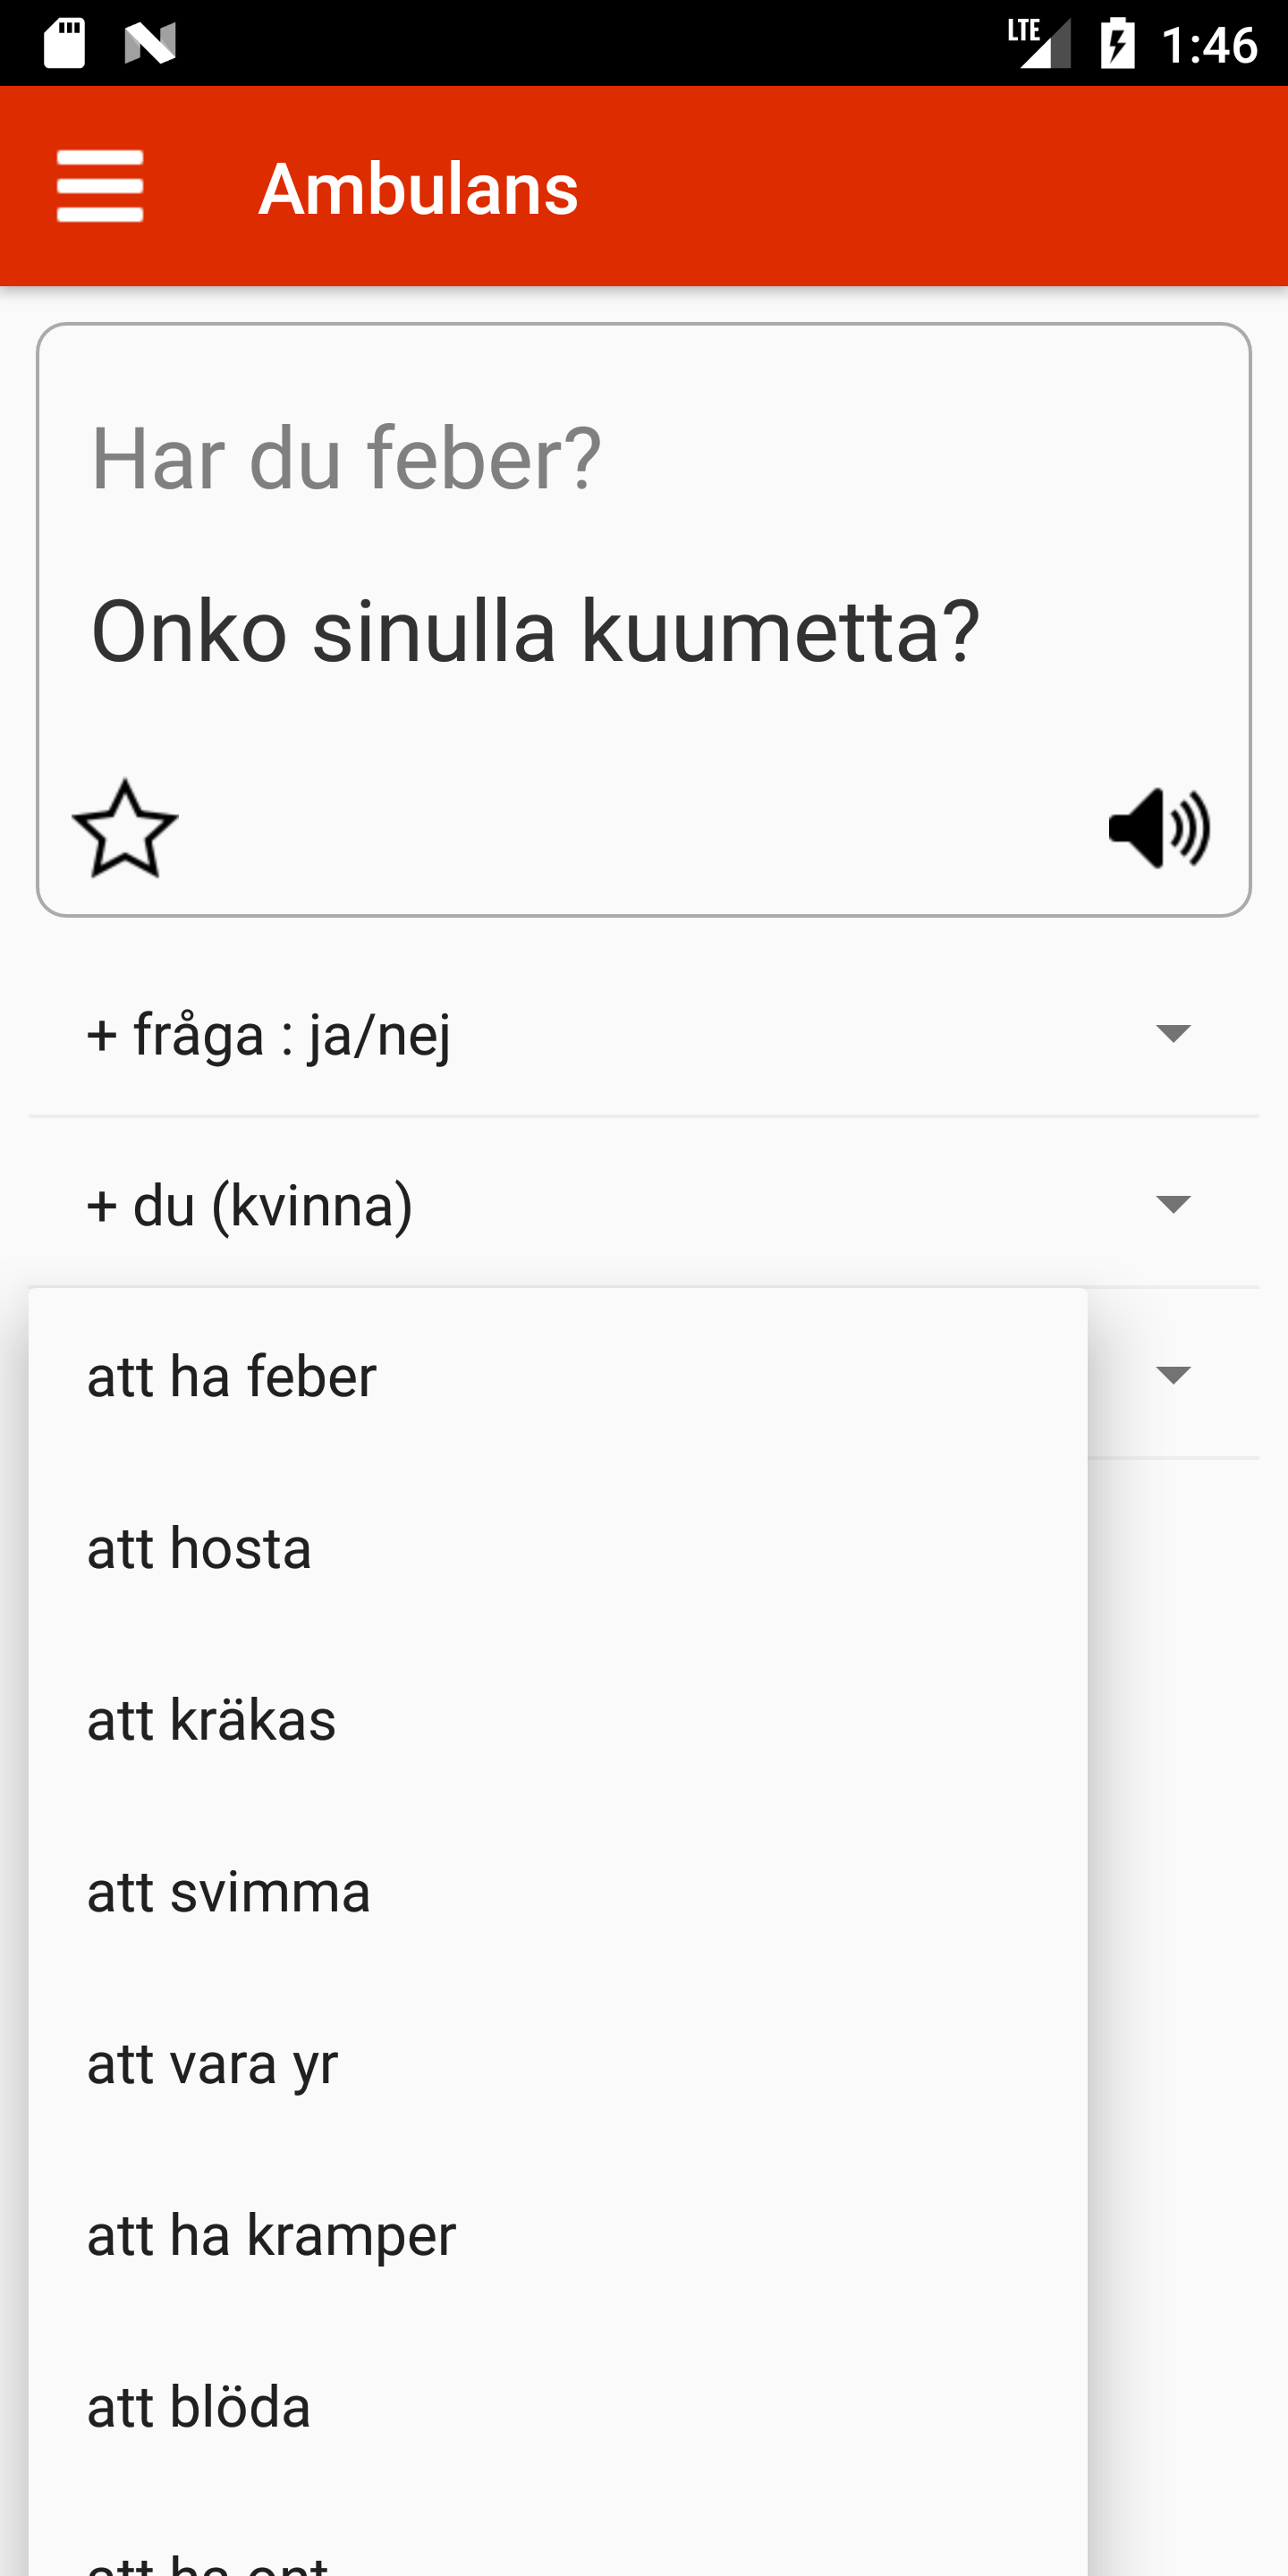 Ambulance app: Translation from Swedish to Finnish